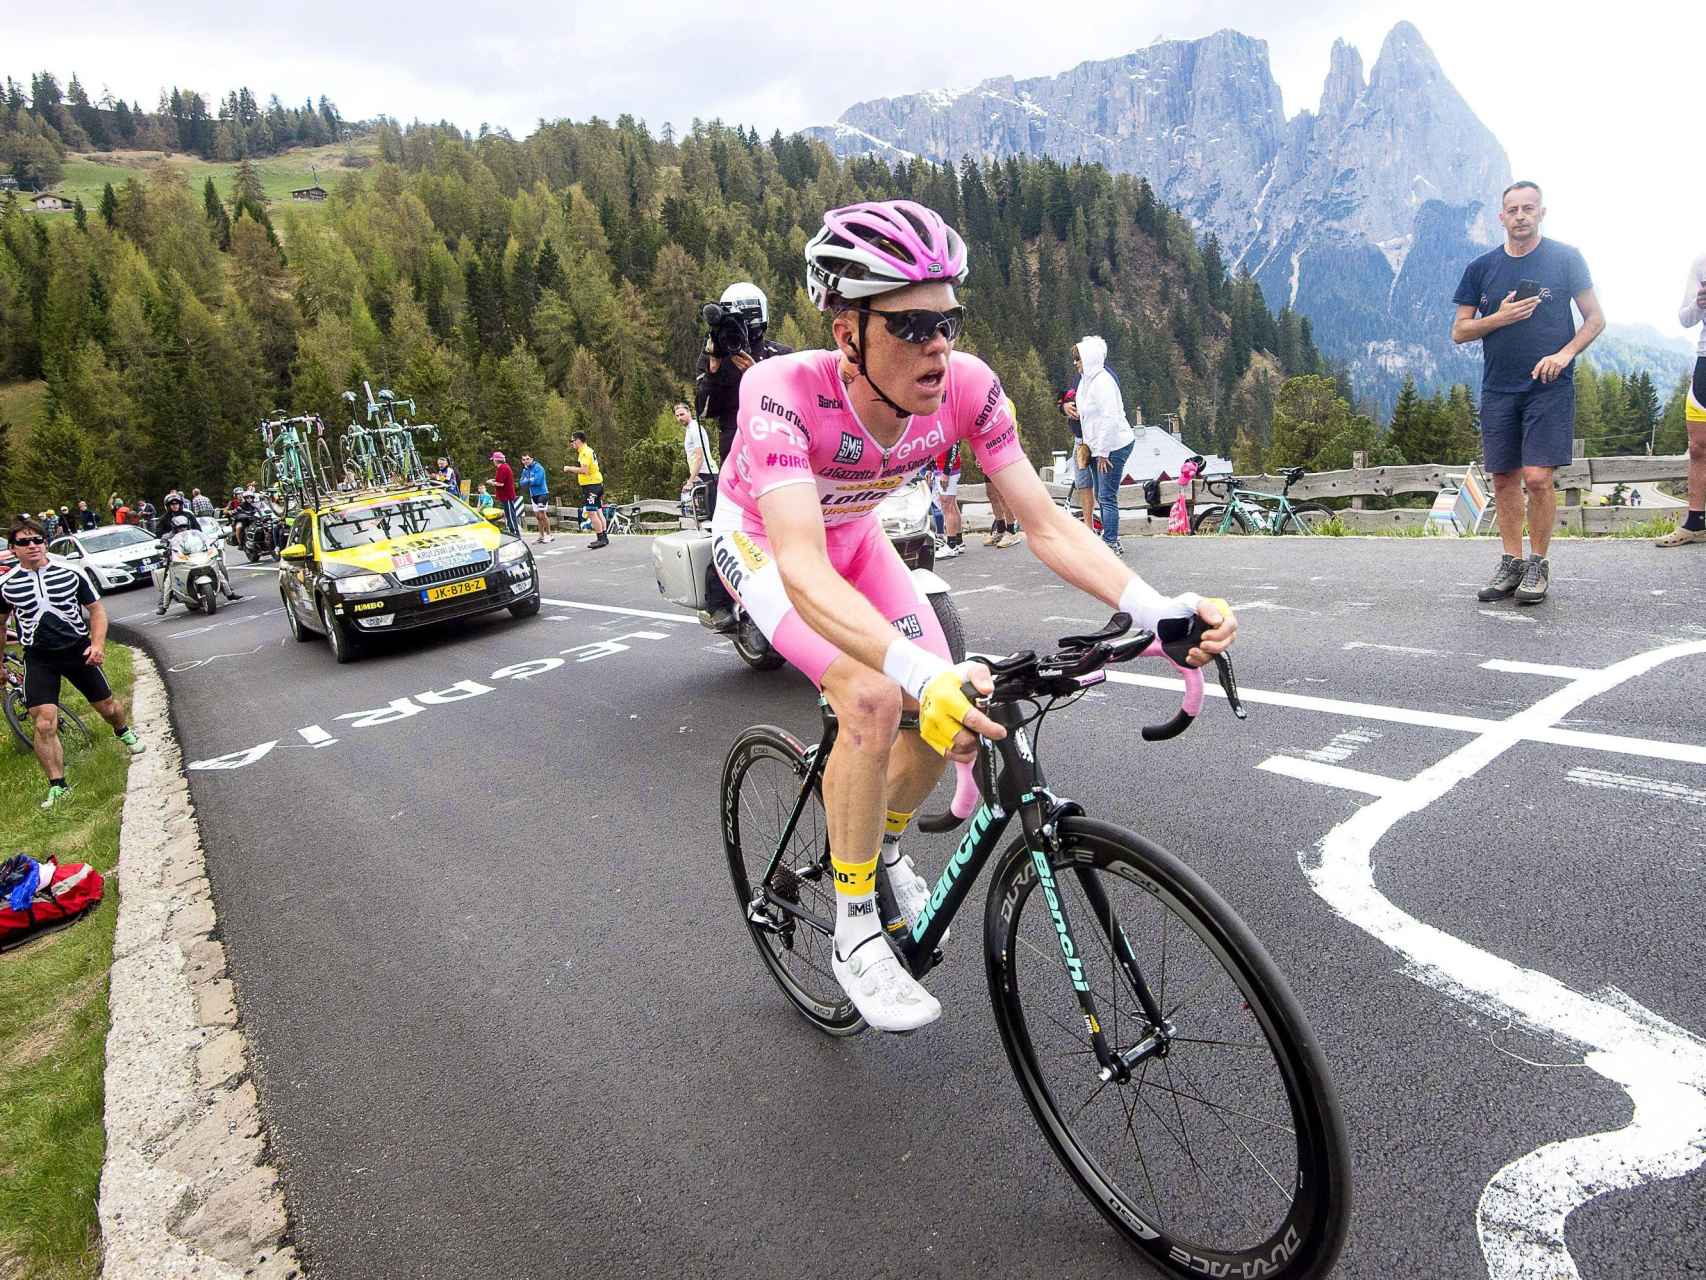 Kruijswijk con la maglia rosa de líder del Giro de Italia.